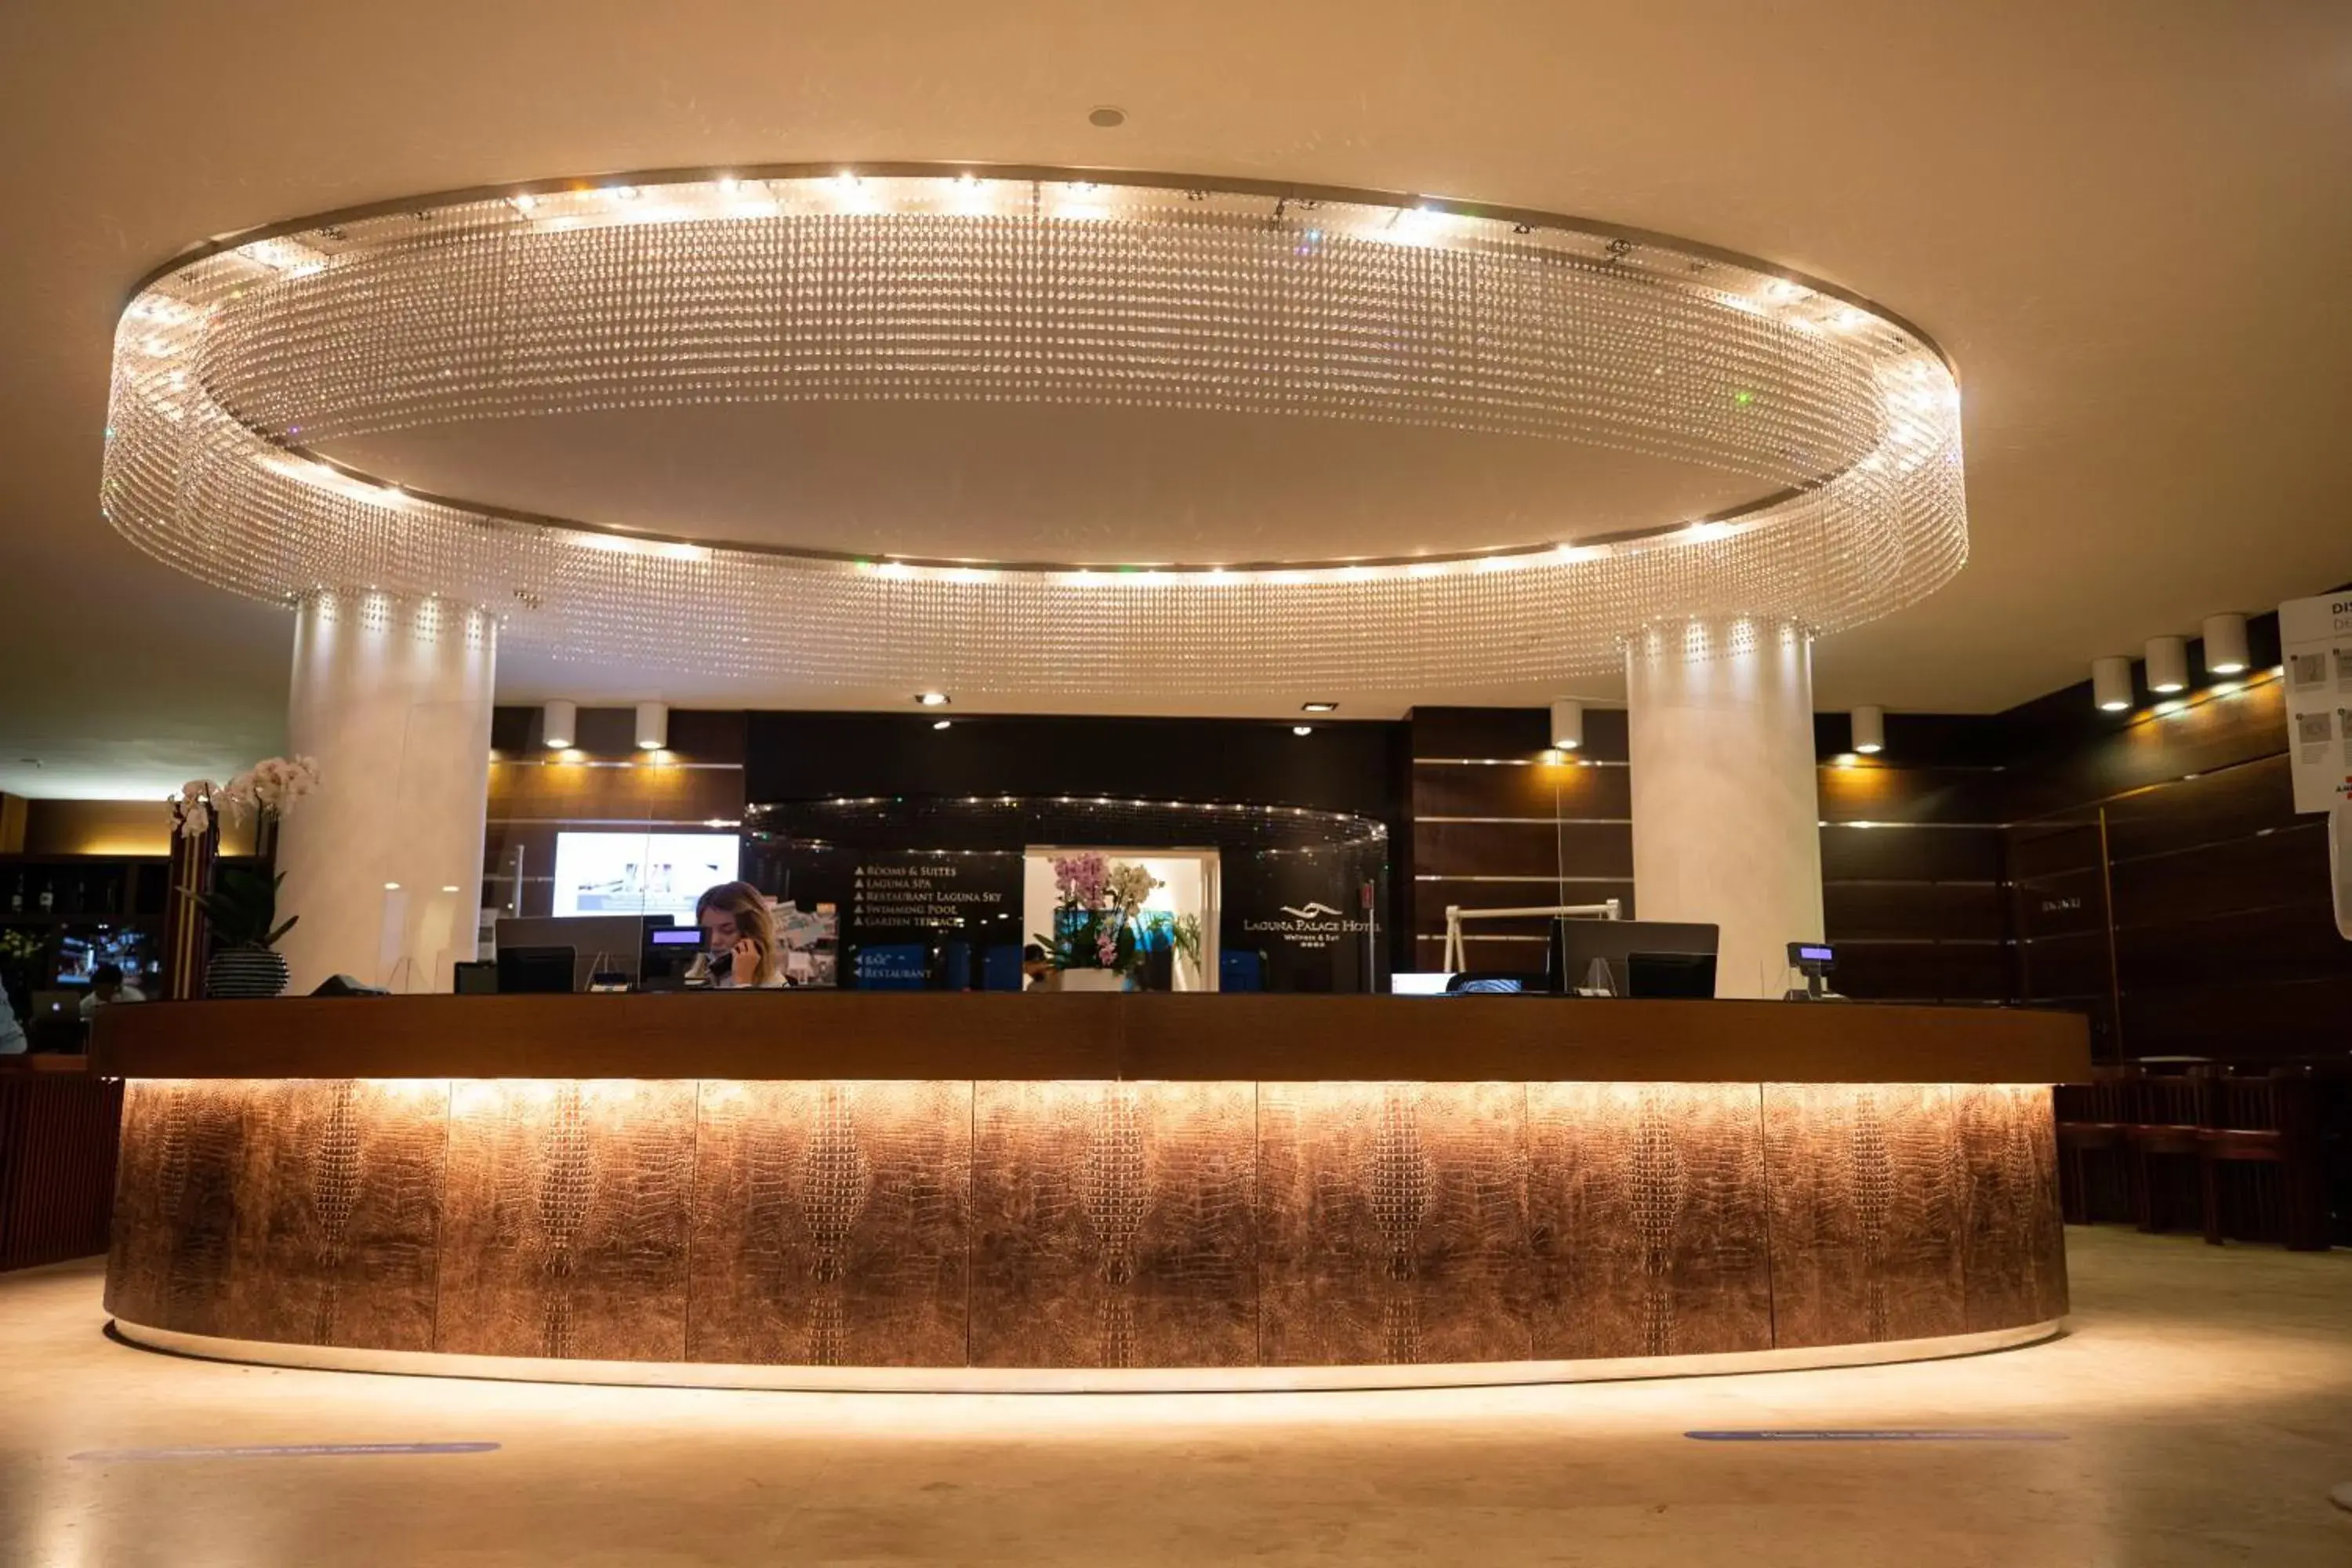 Lobby or reception in Laguna Palace Hotel Grado